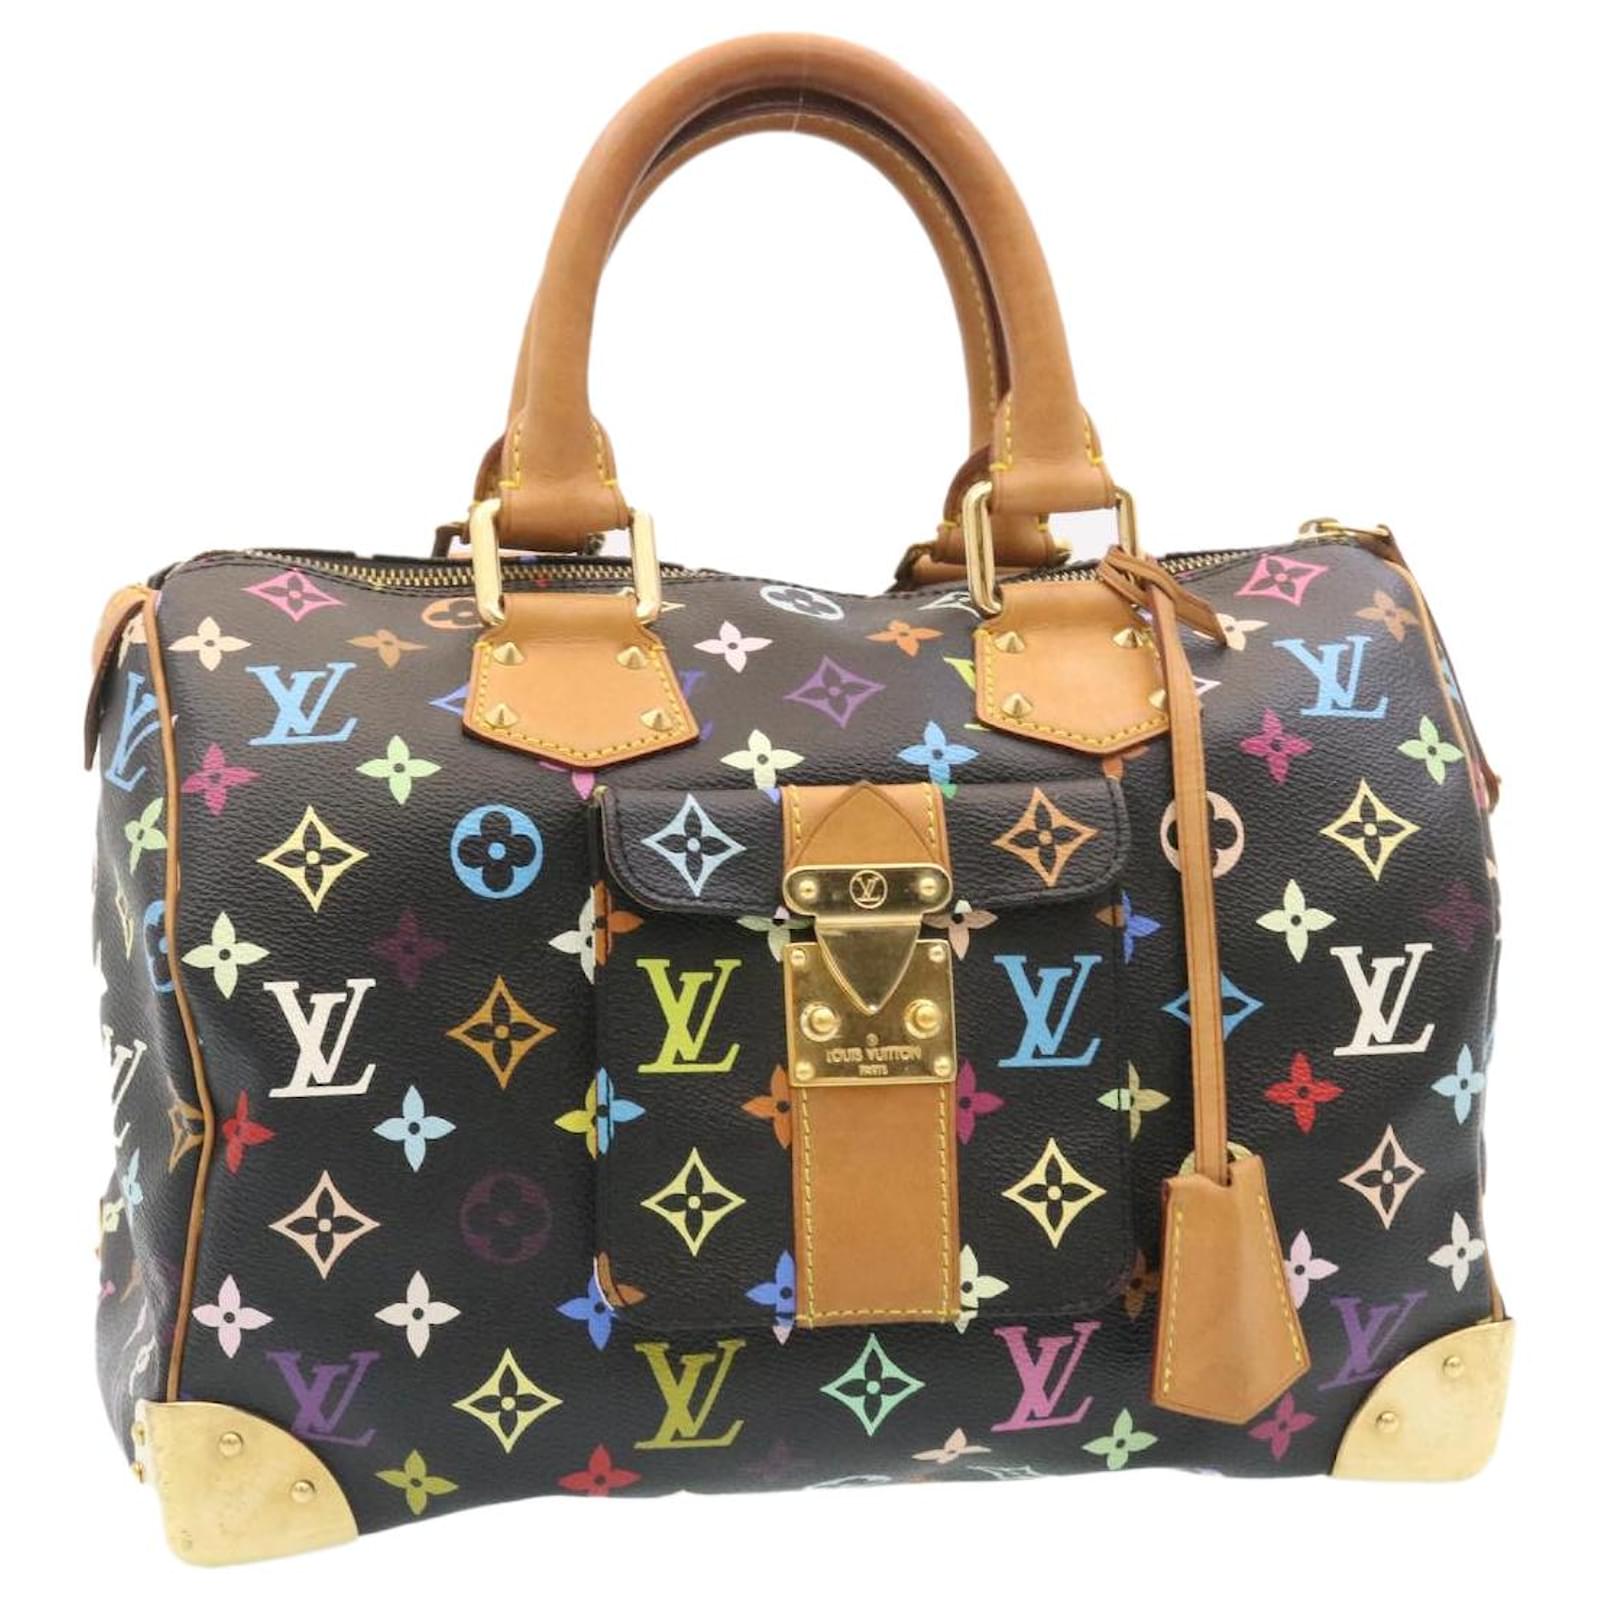 Louis Vuitton Black Monogram Paris Embossed Leather Limited Edition Speedy  Cube 30 Bag